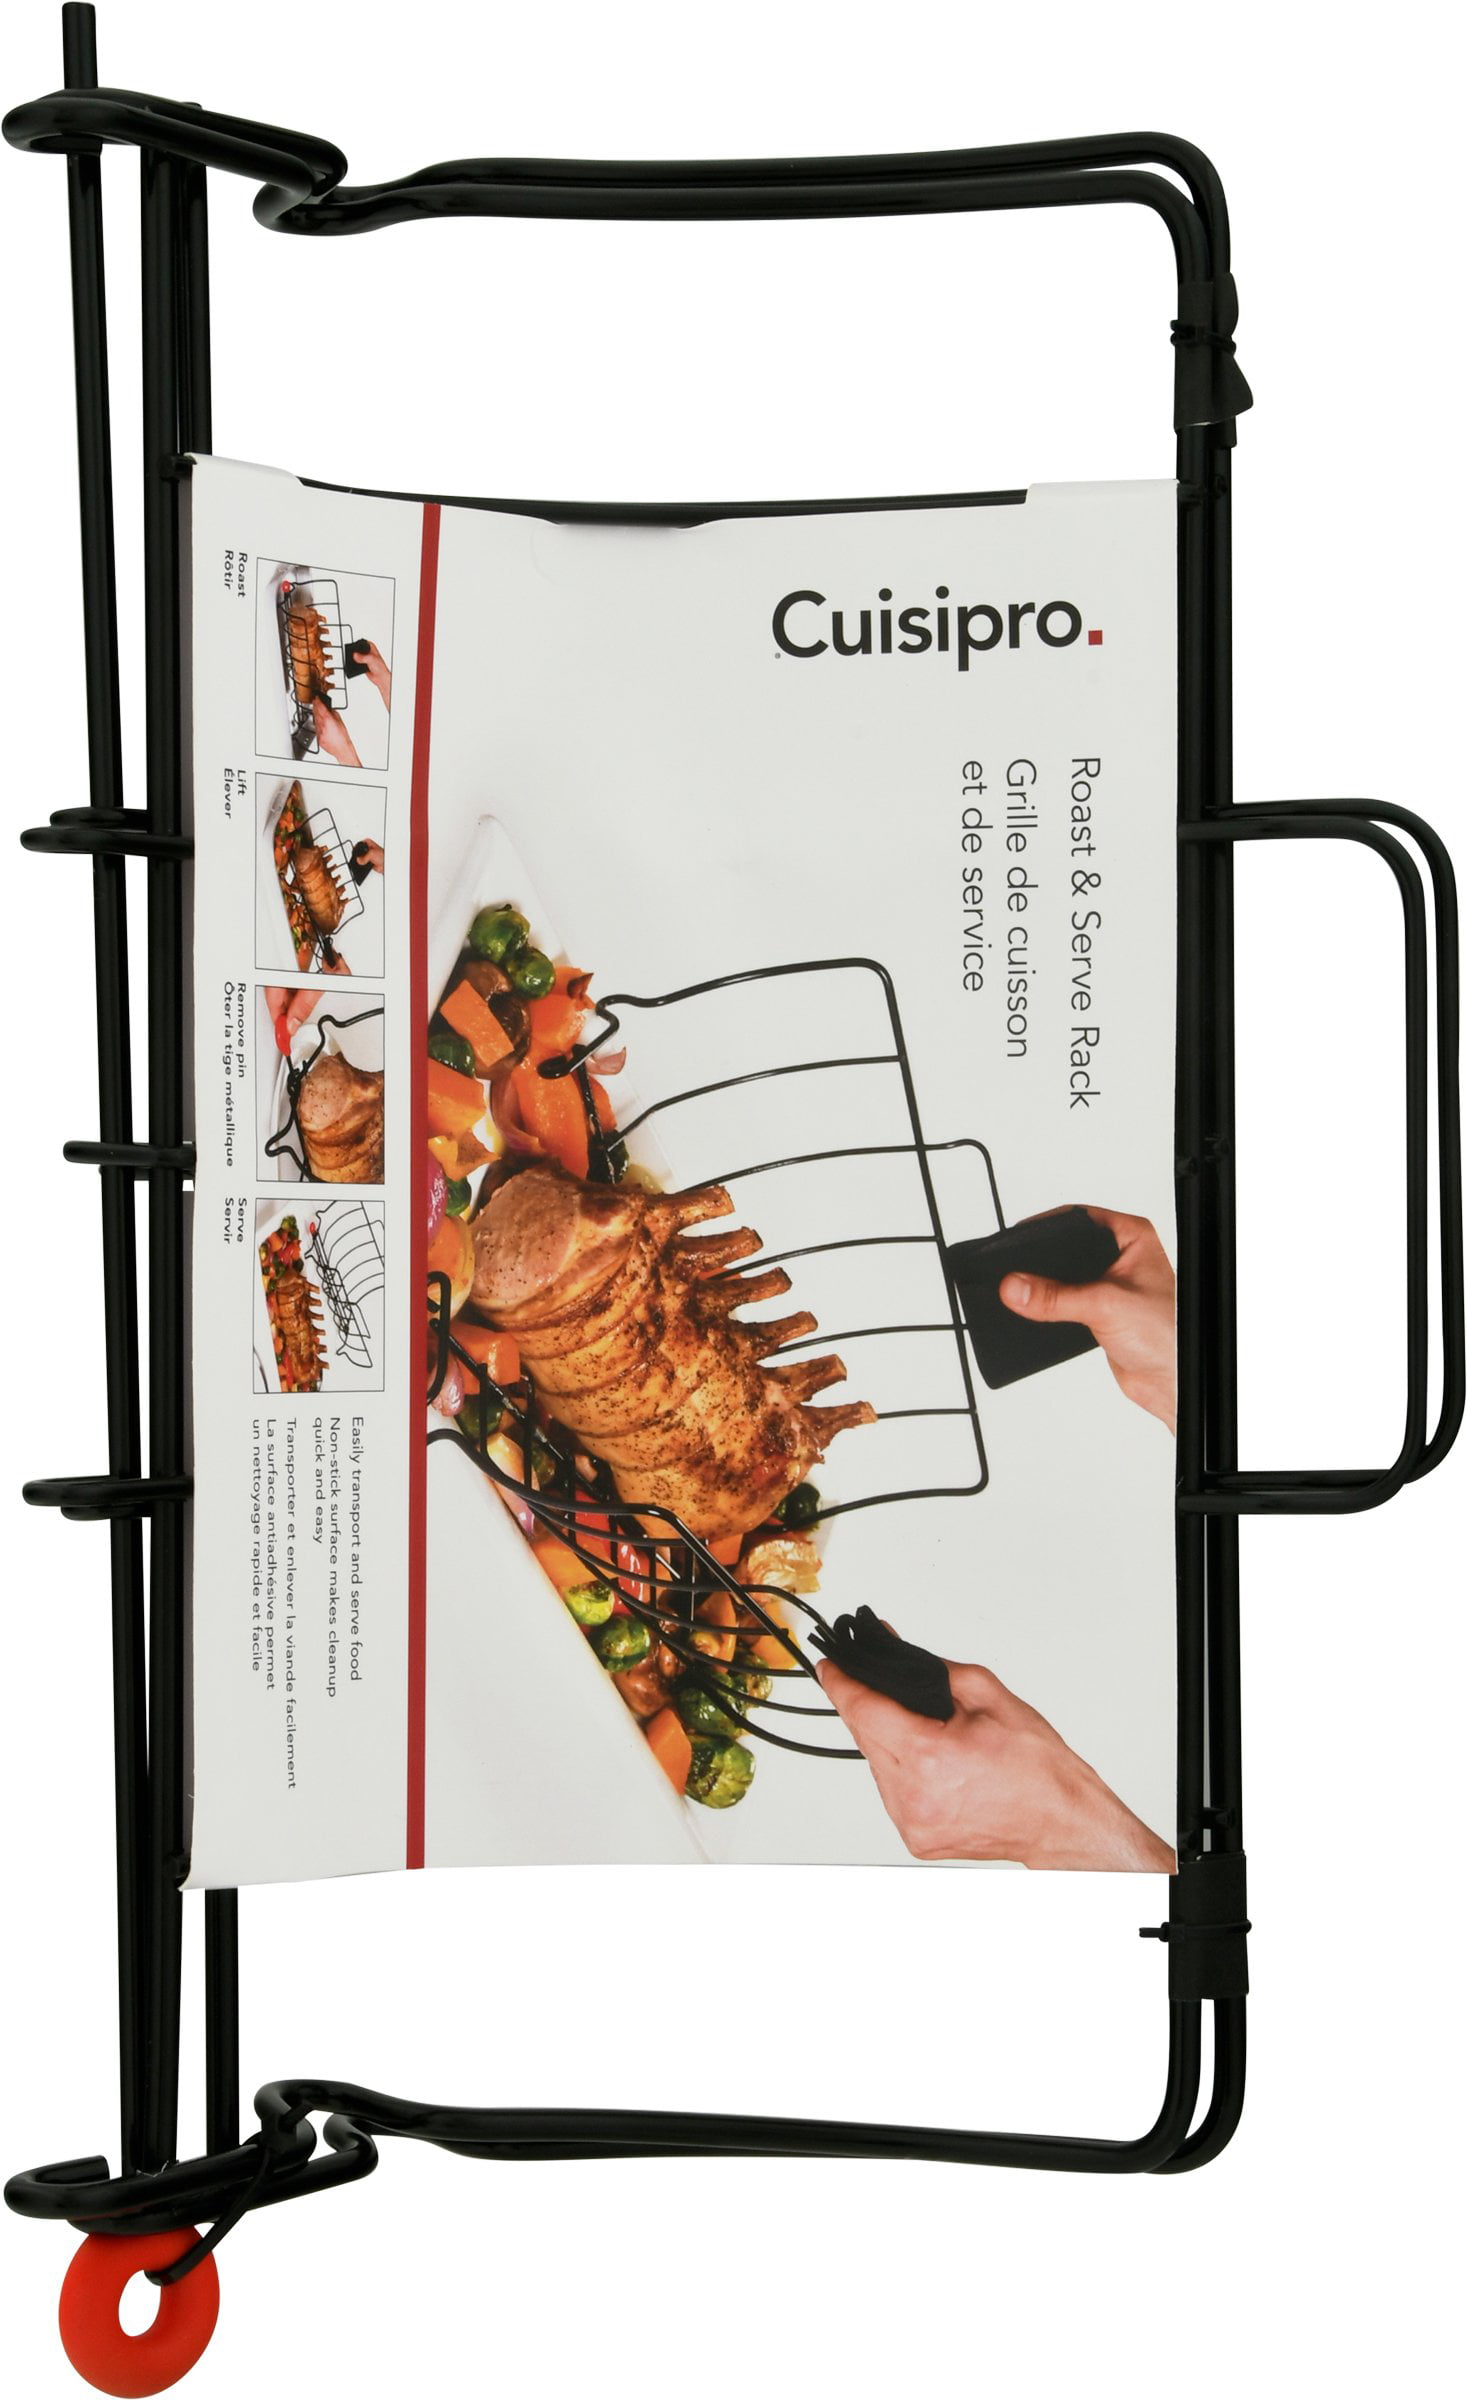 Cuisipro Baking Sheet/Cooling Rack bundle